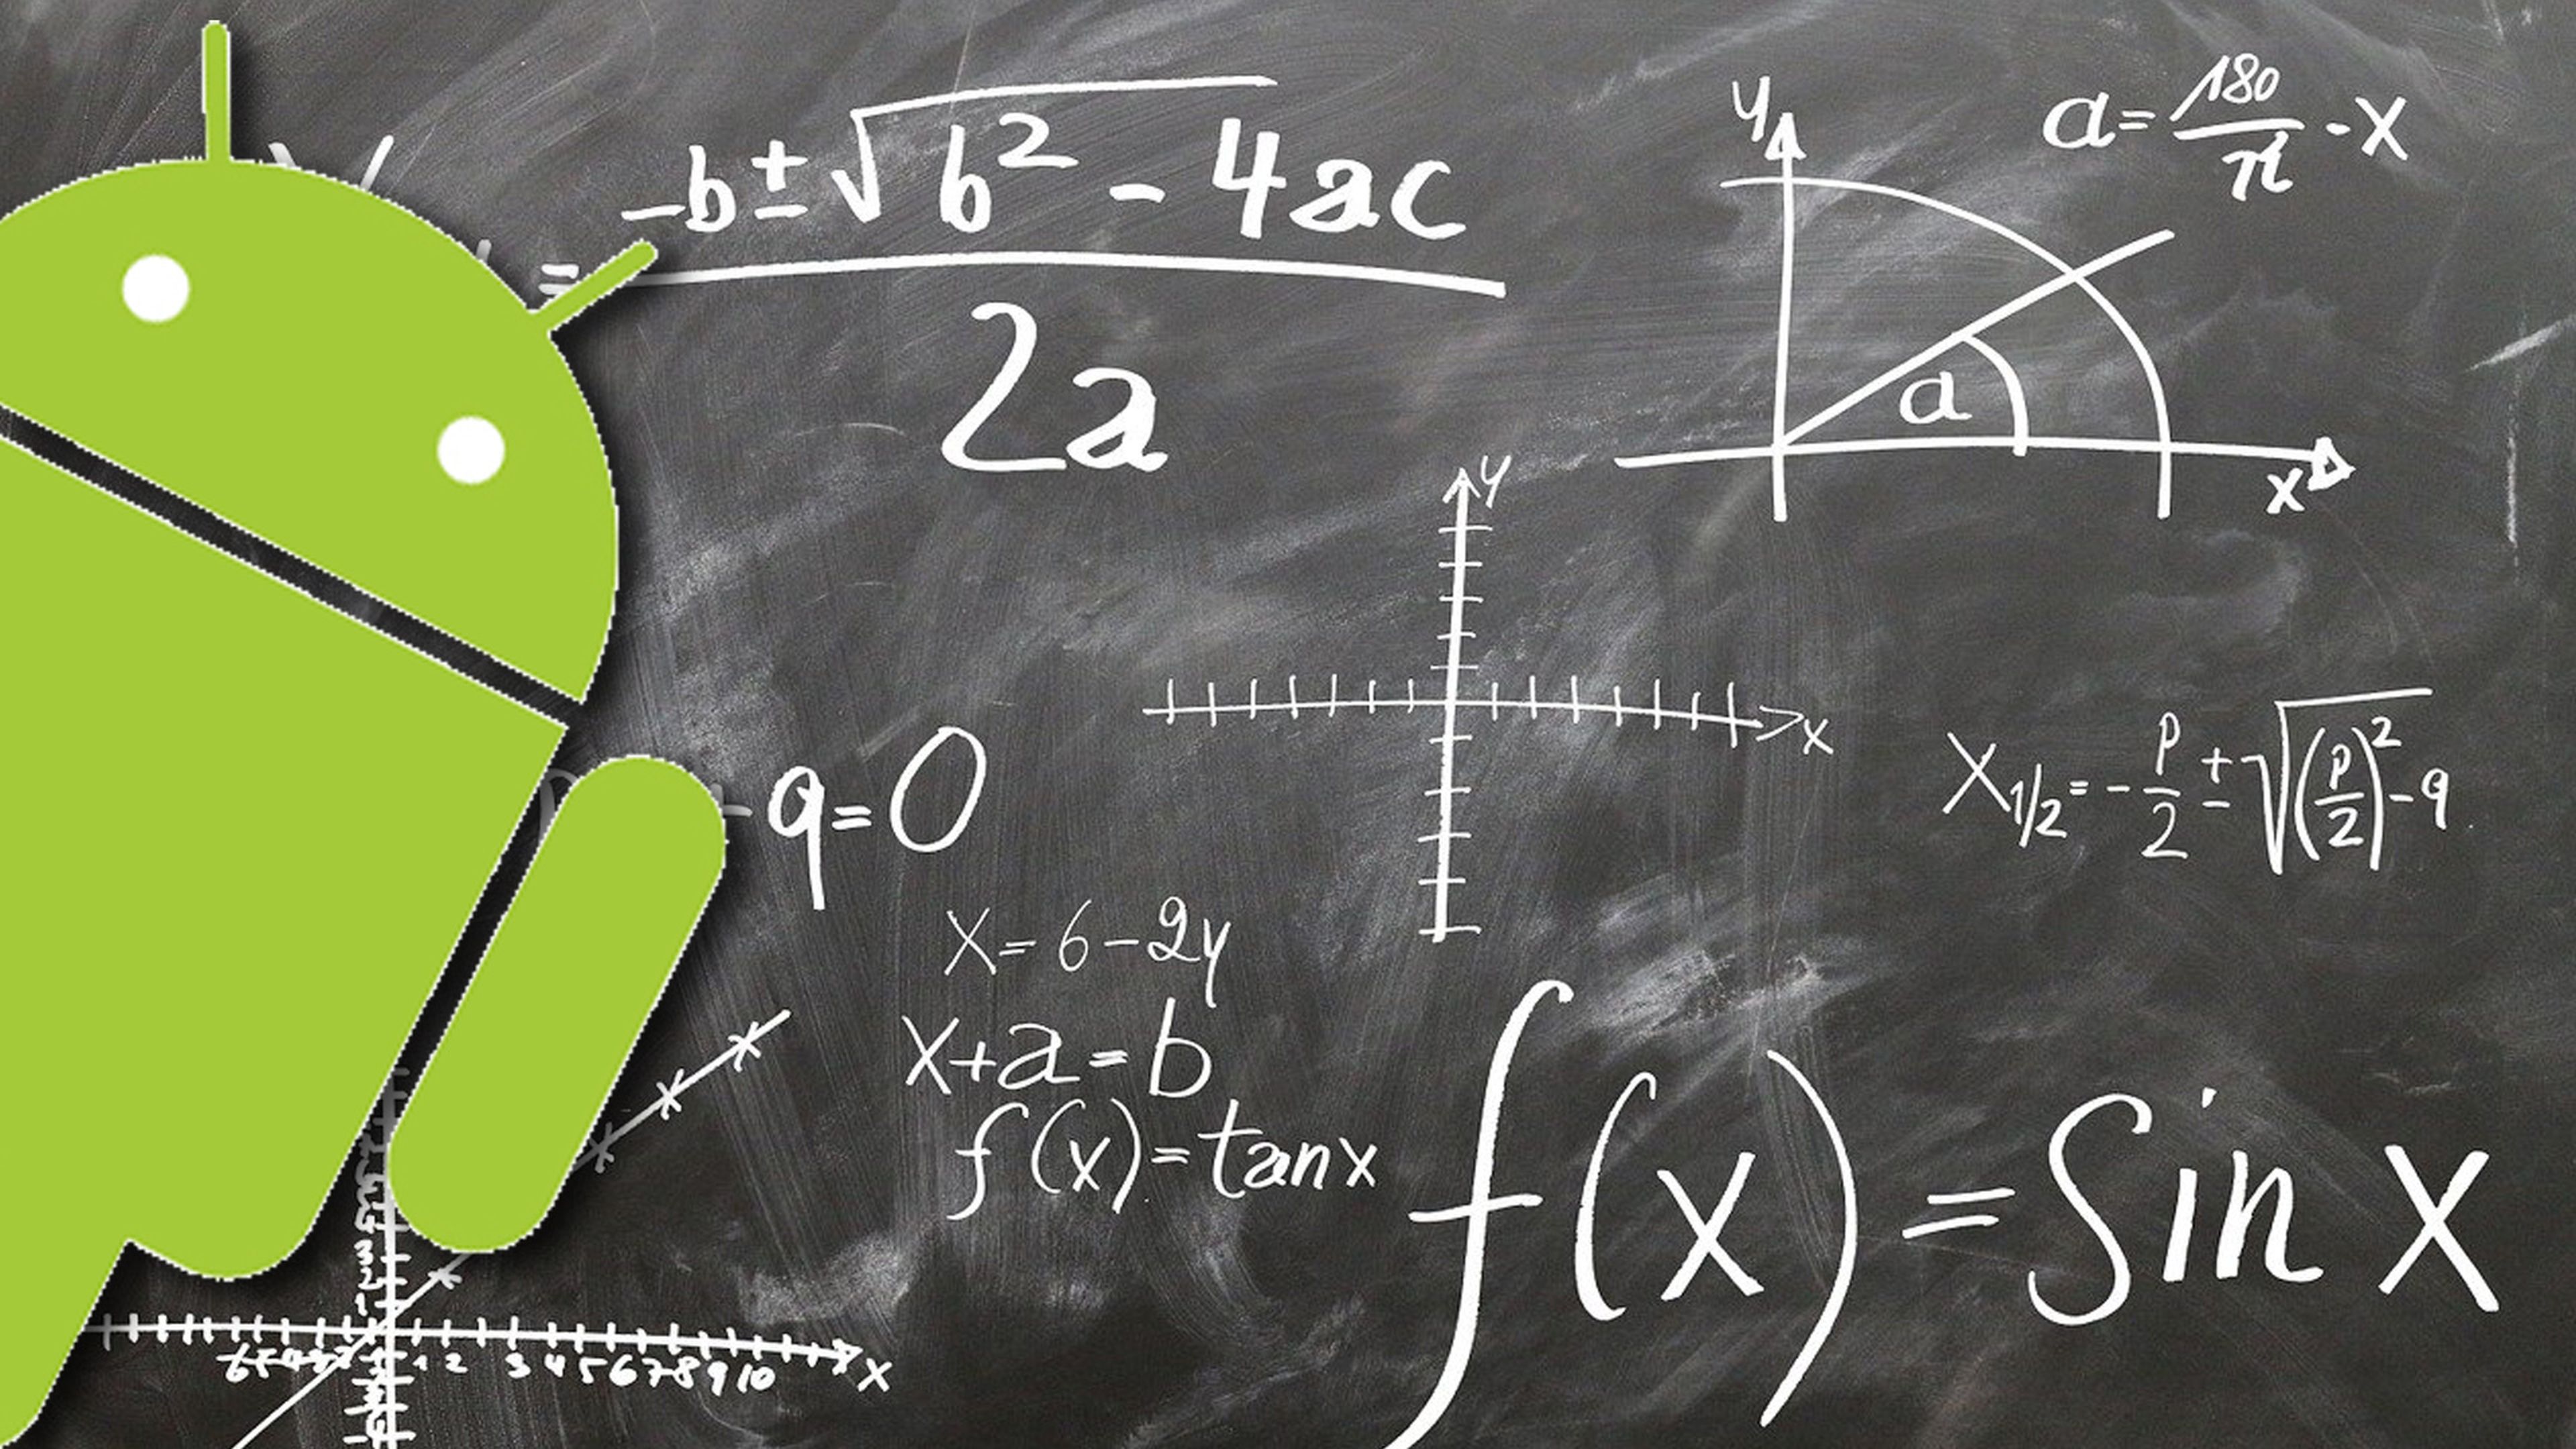 apps matemáticas para Android